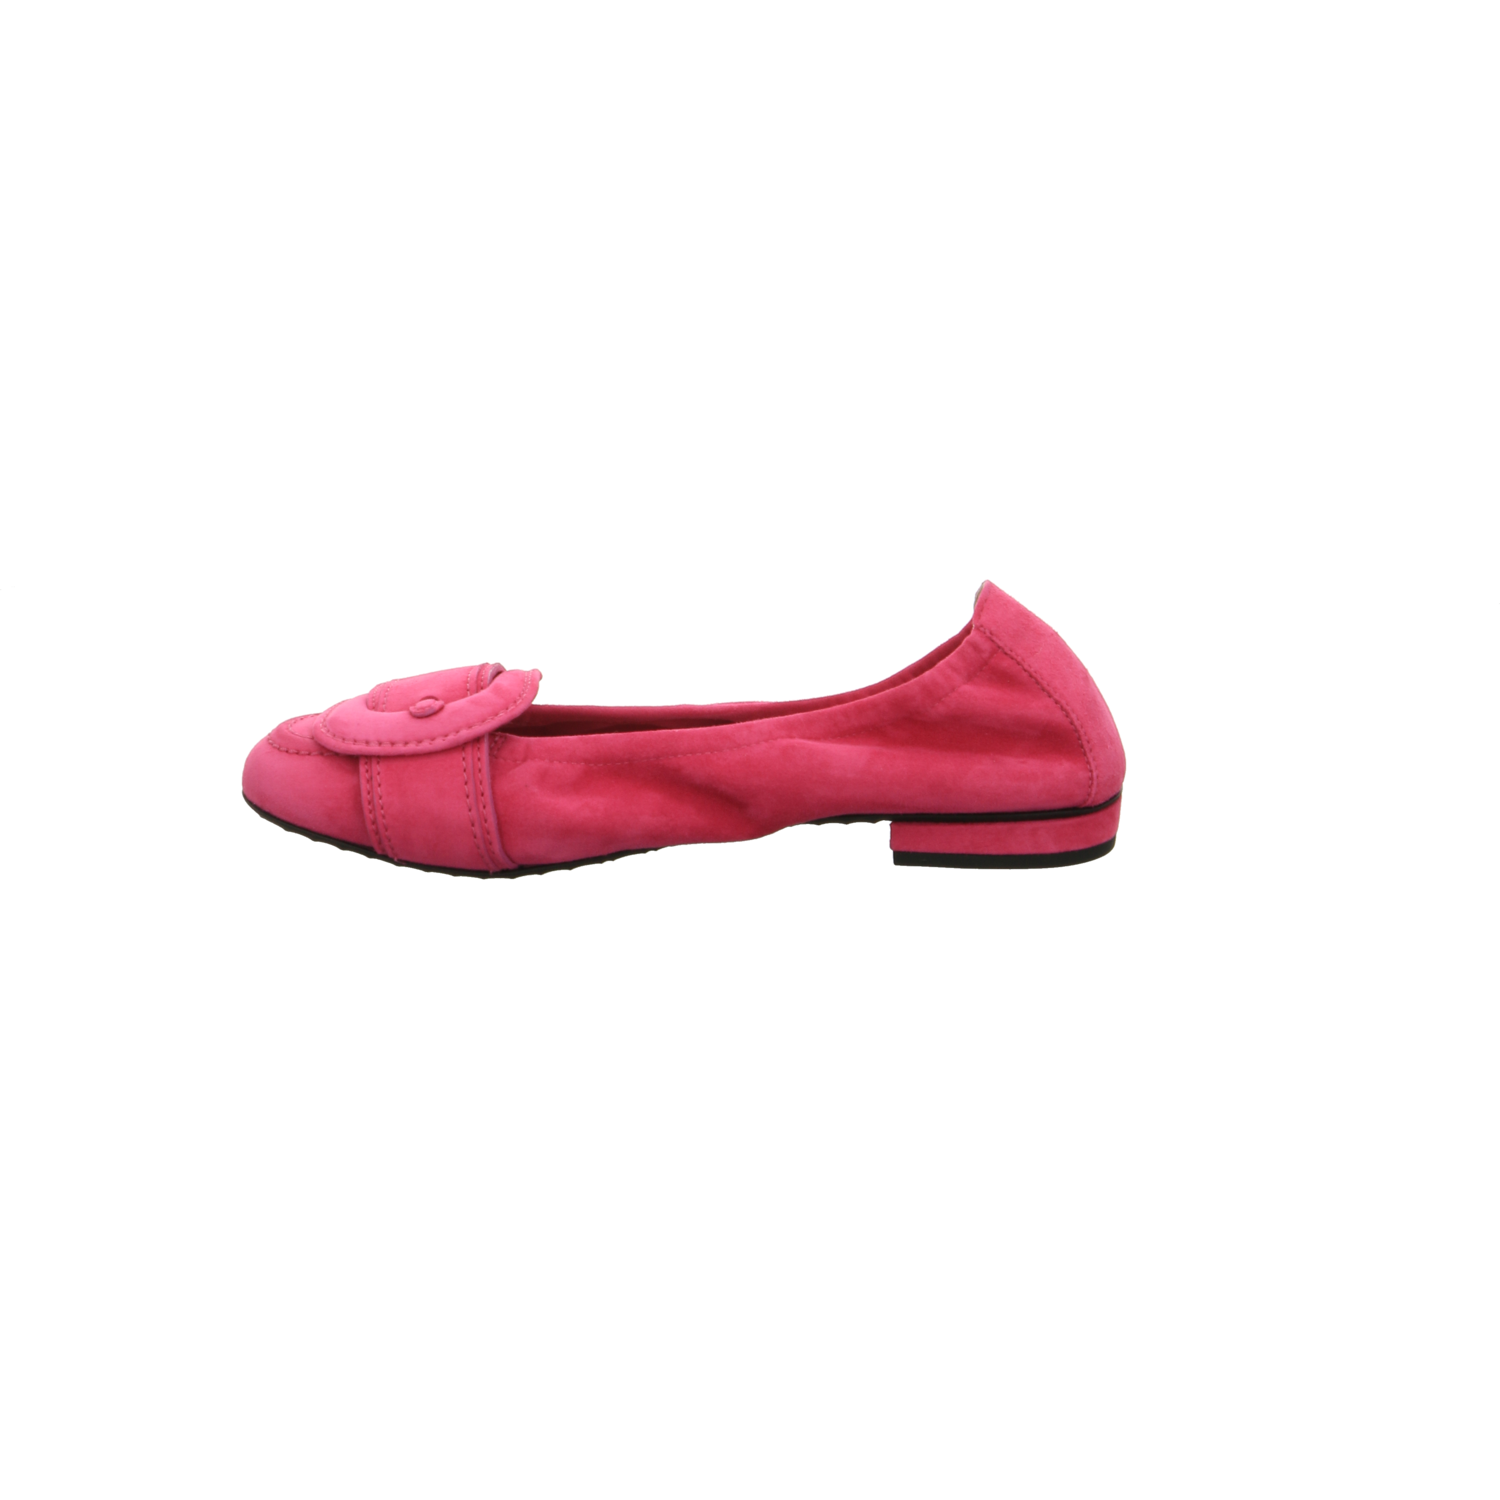 K + S shoes Pumps bis 25 mm pink / fuchsia